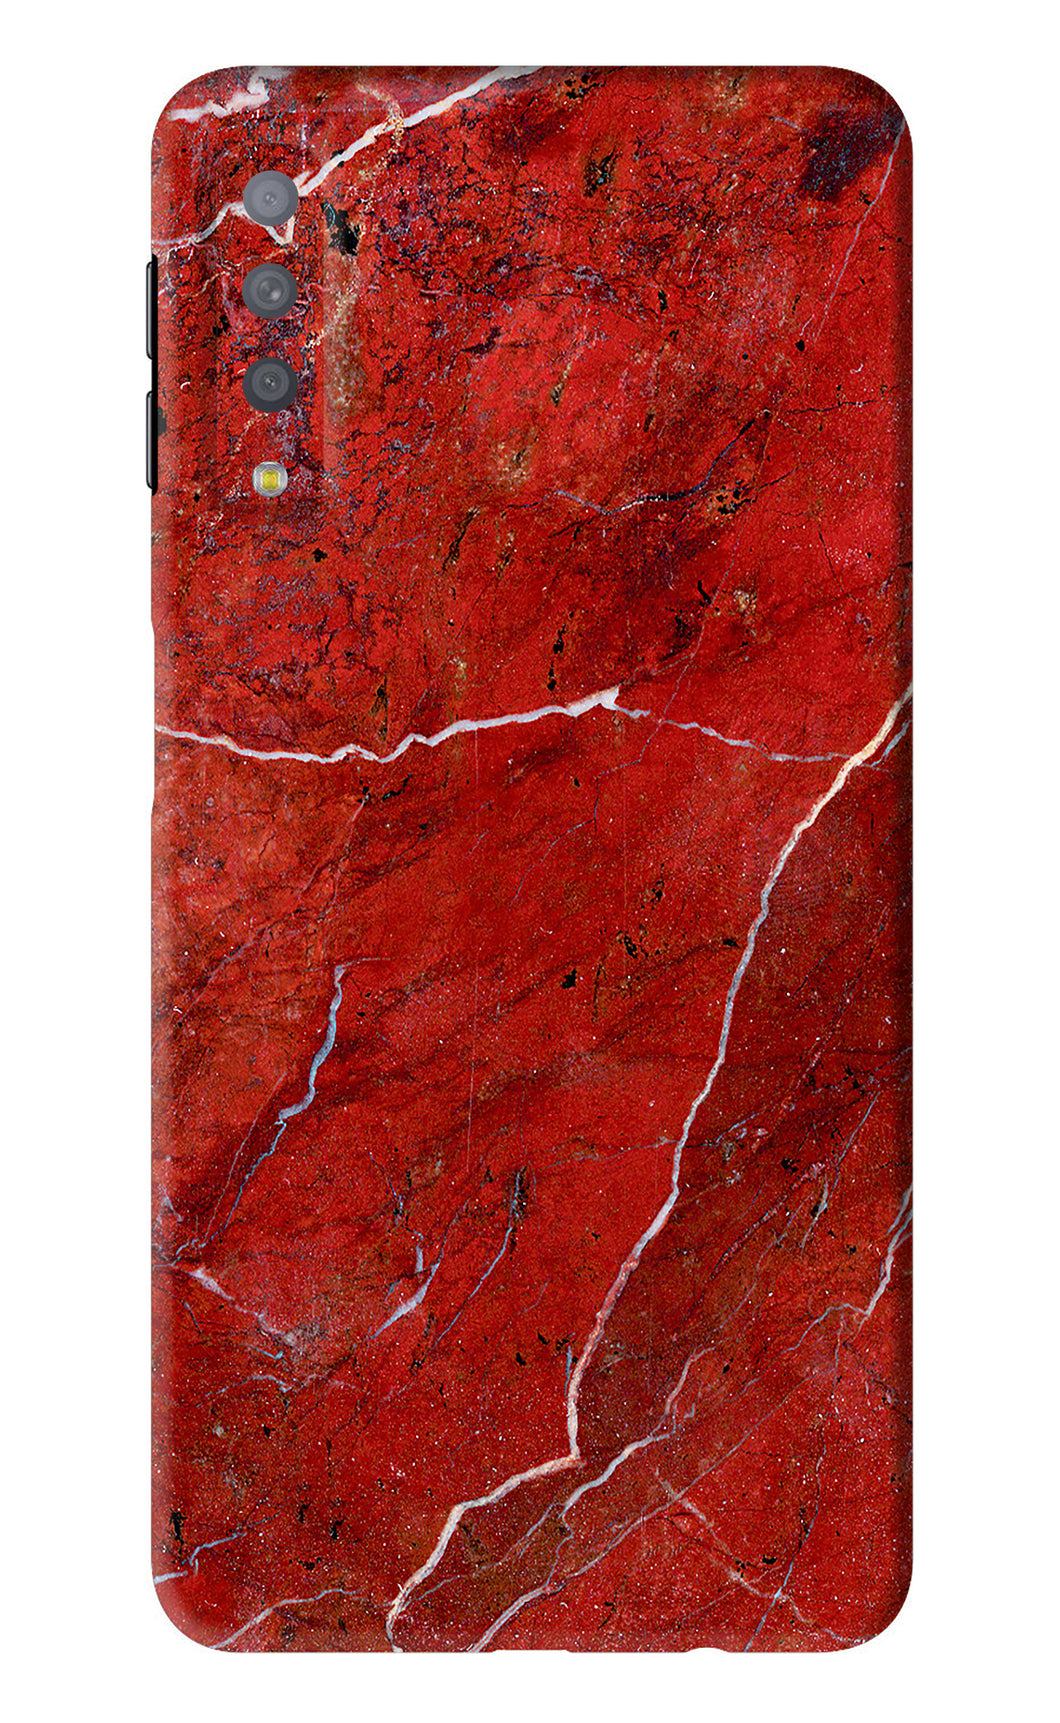 Red Marble Design Samsung Galaxy A7 2018 Back Skin Wrap